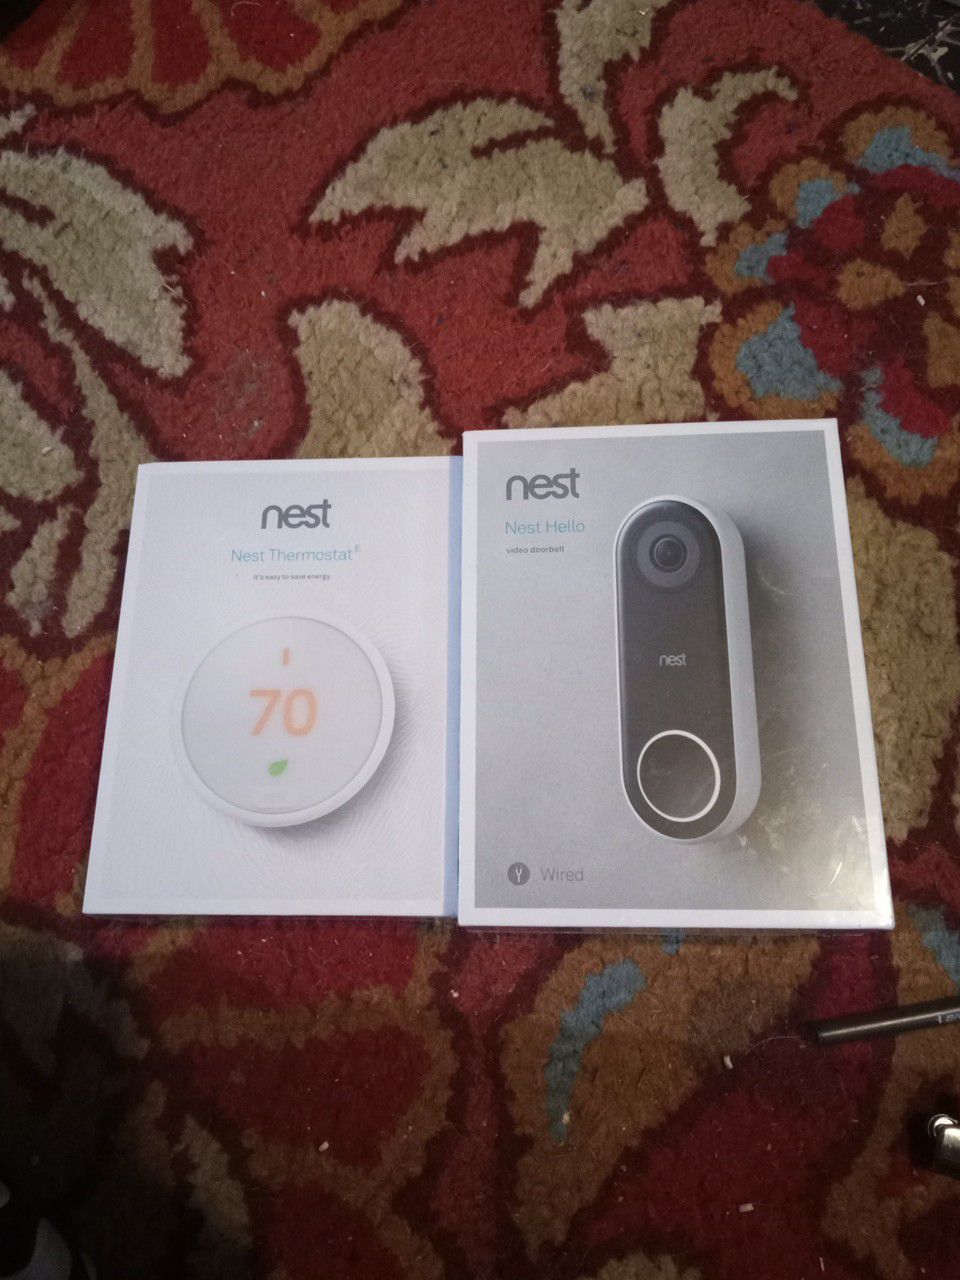 Nest thermostat e / nest hello video doorbell